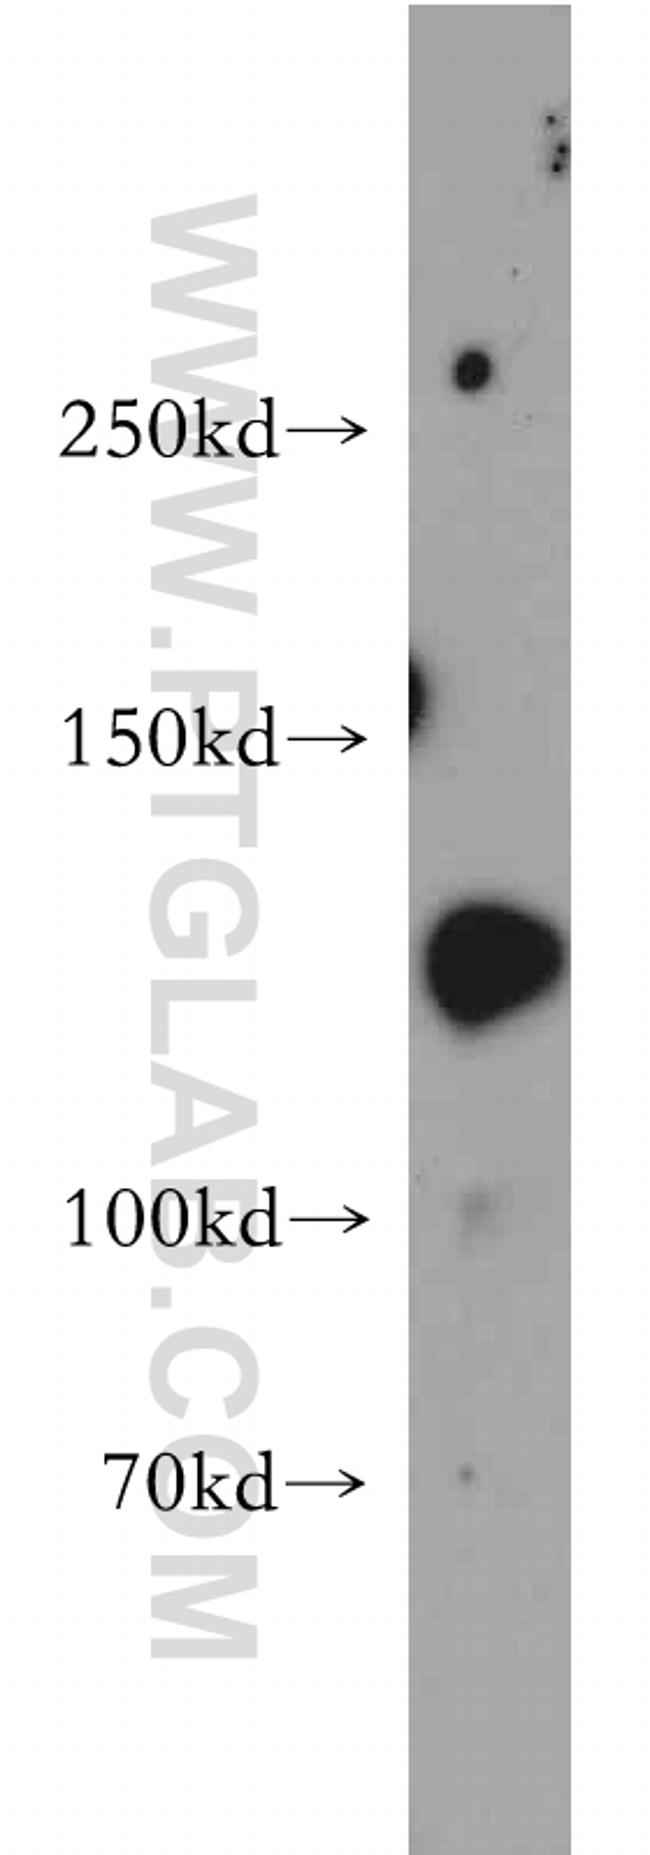 SRGAP1 Antibody in Western Blot (WB)